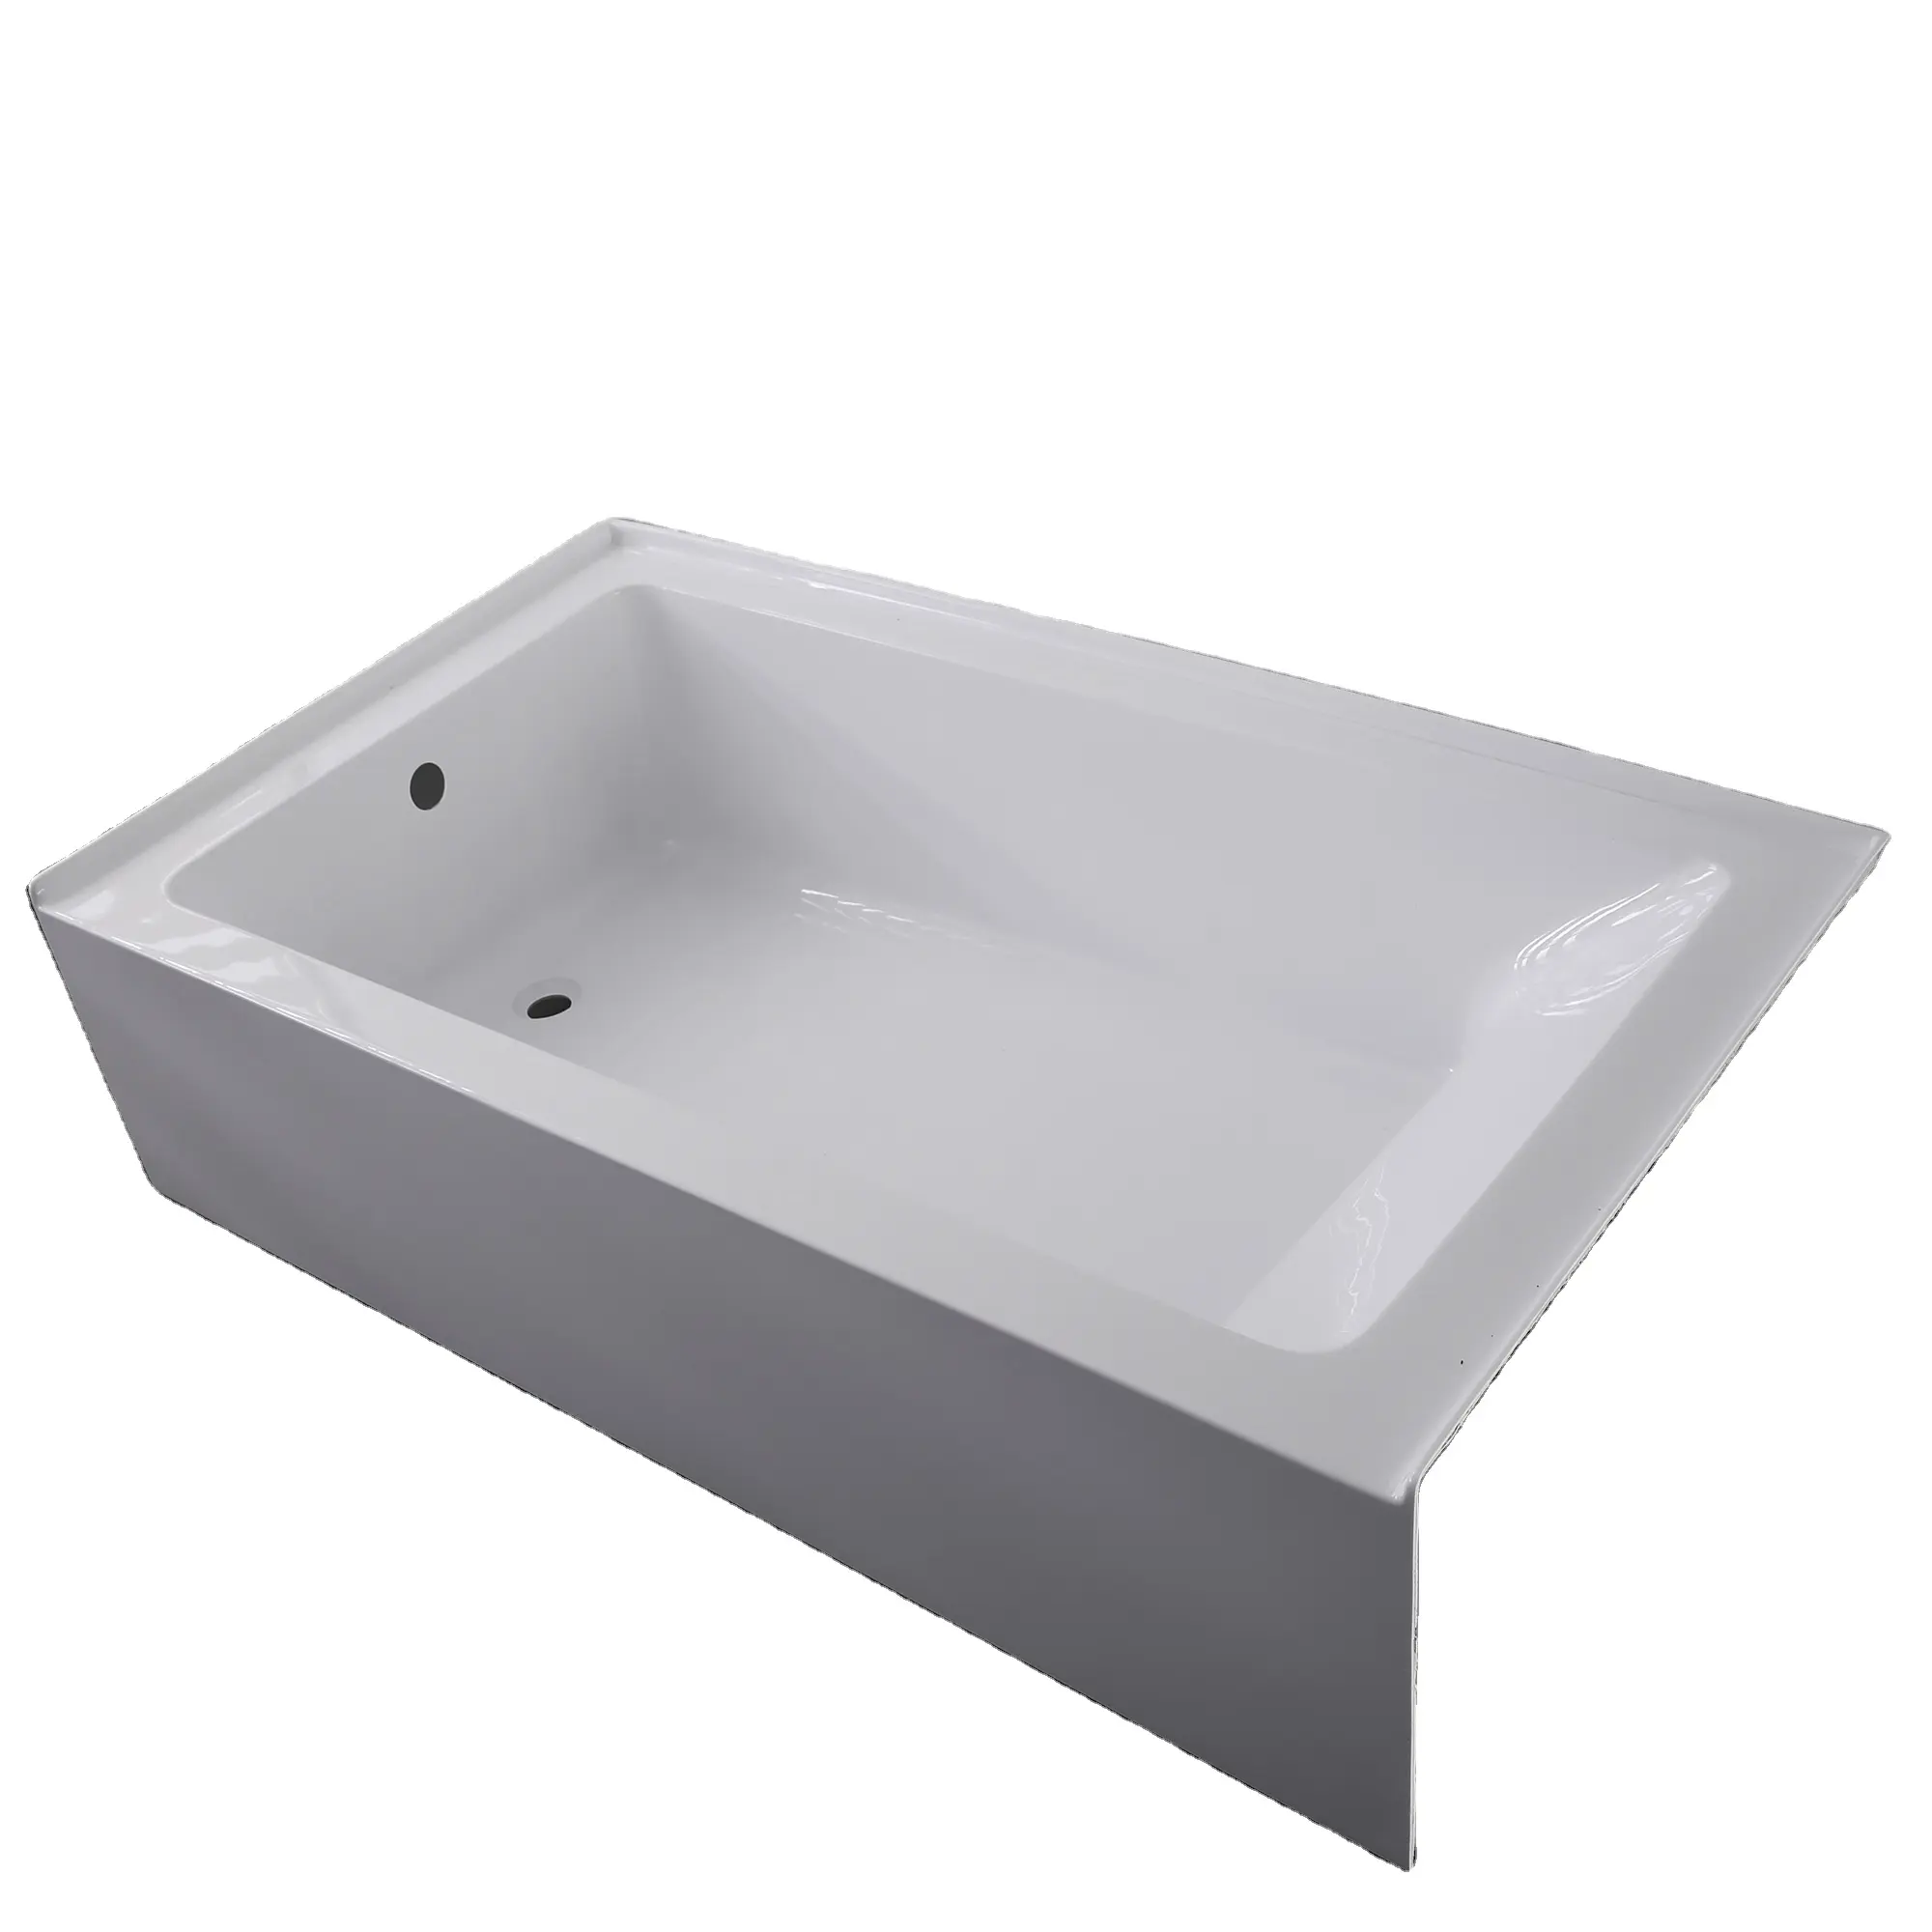 CUPC the best factory price / quality Popular north America standard alcove bathtub/single skirt bathtub 603416 inches